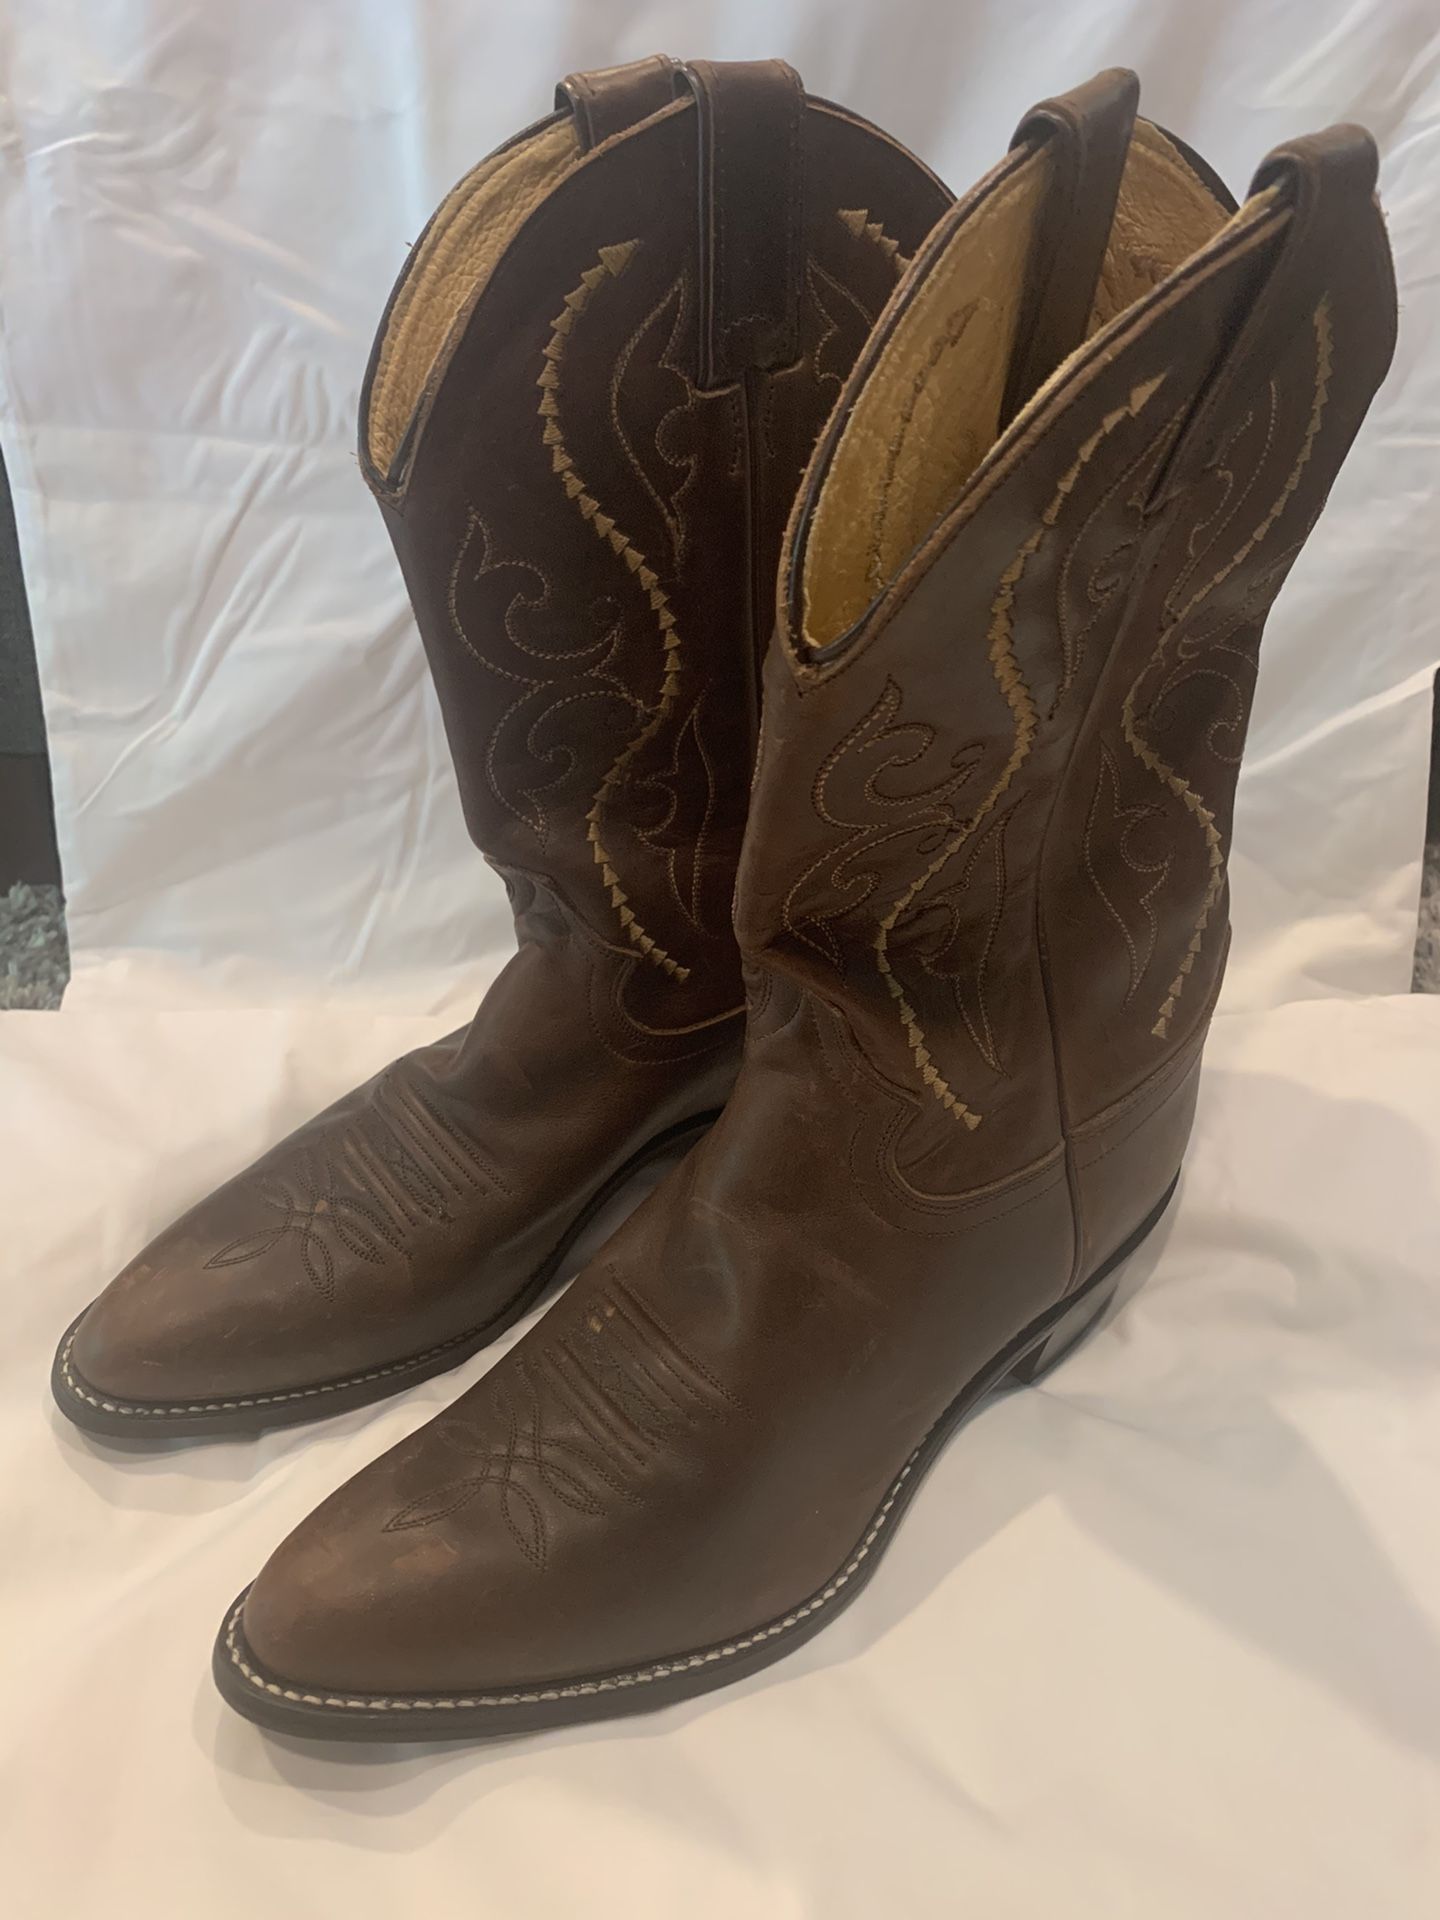 Women’s cowboy boots